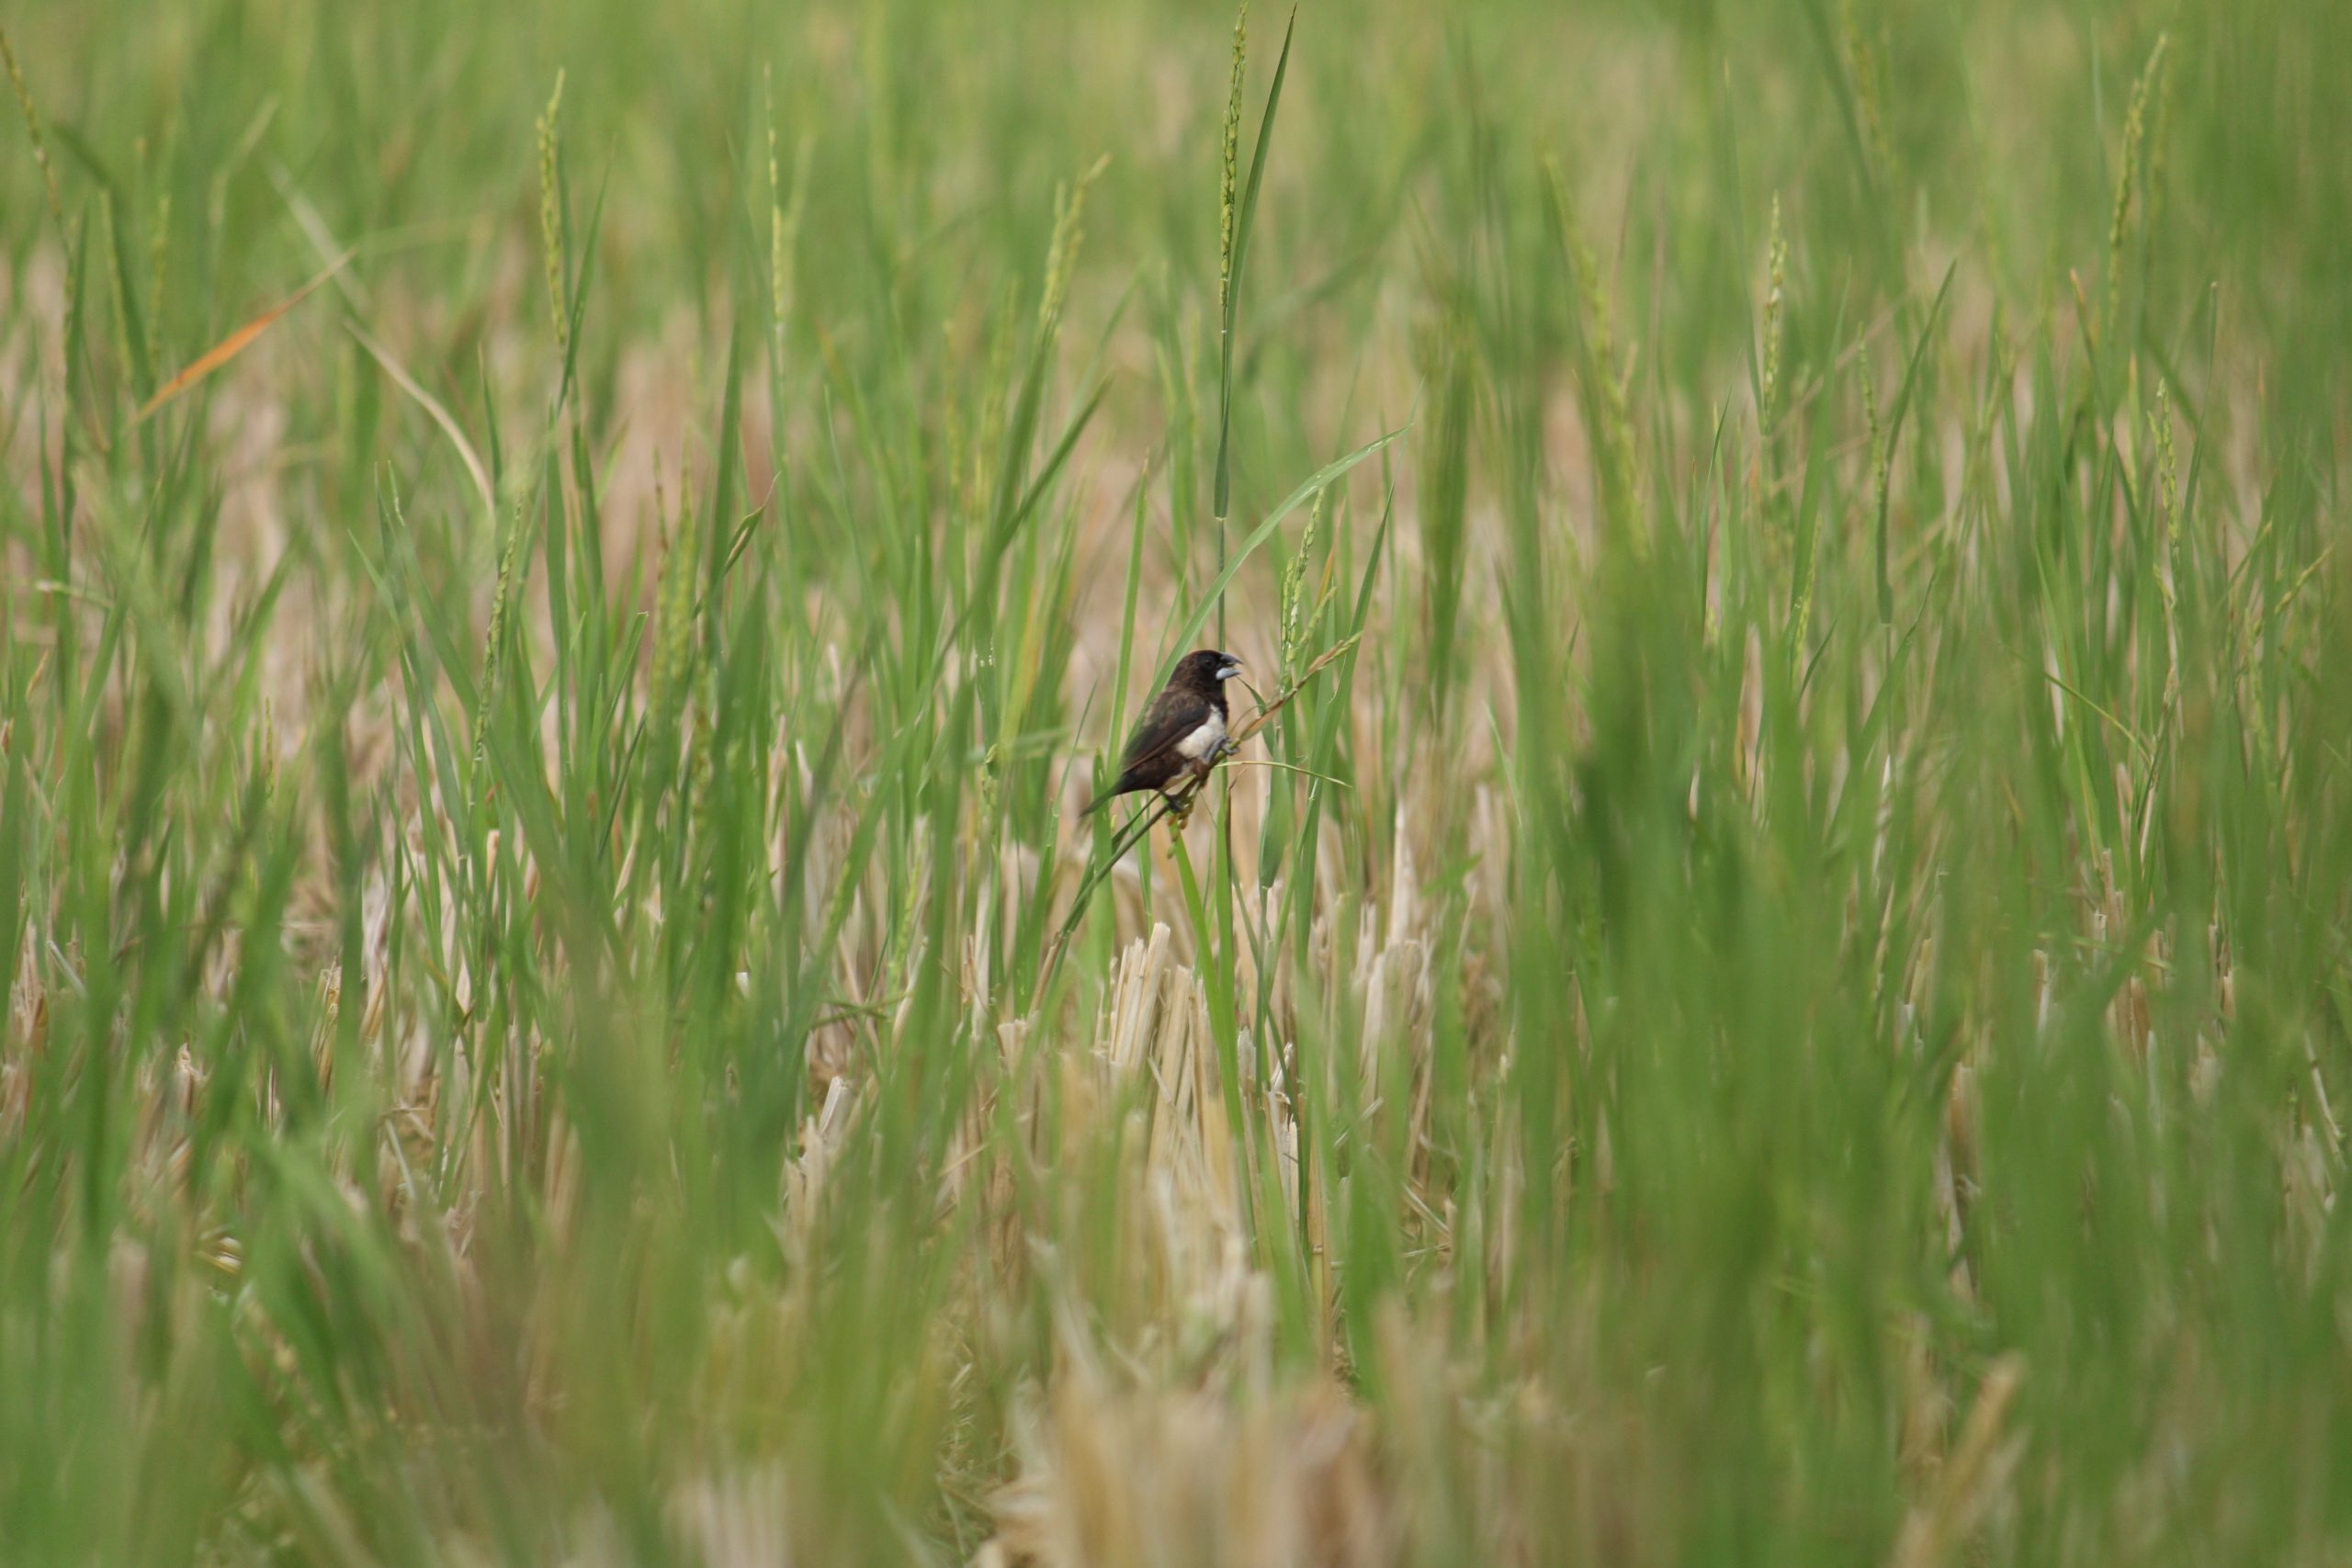 A bird in a paddy field